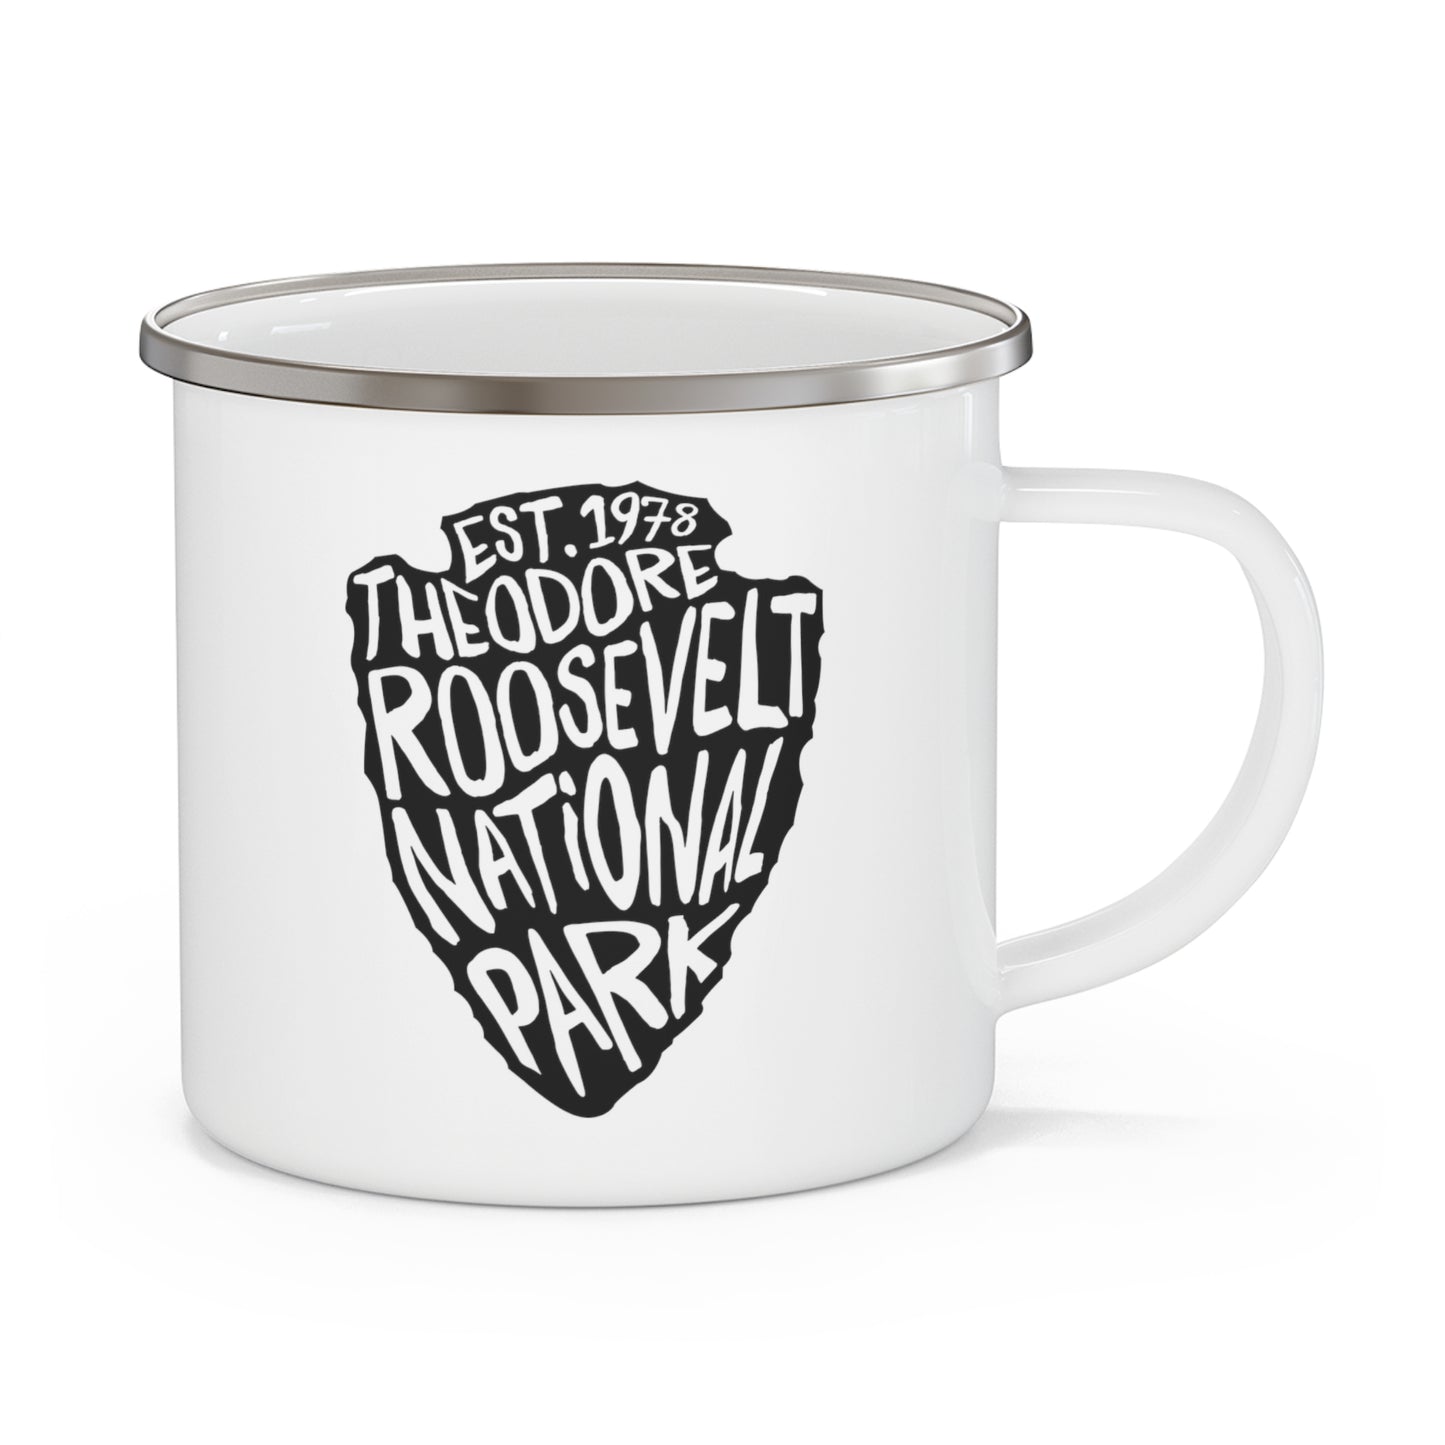 Theodore Roosevelt National Park Enamel Camping Mug - Arrowhead